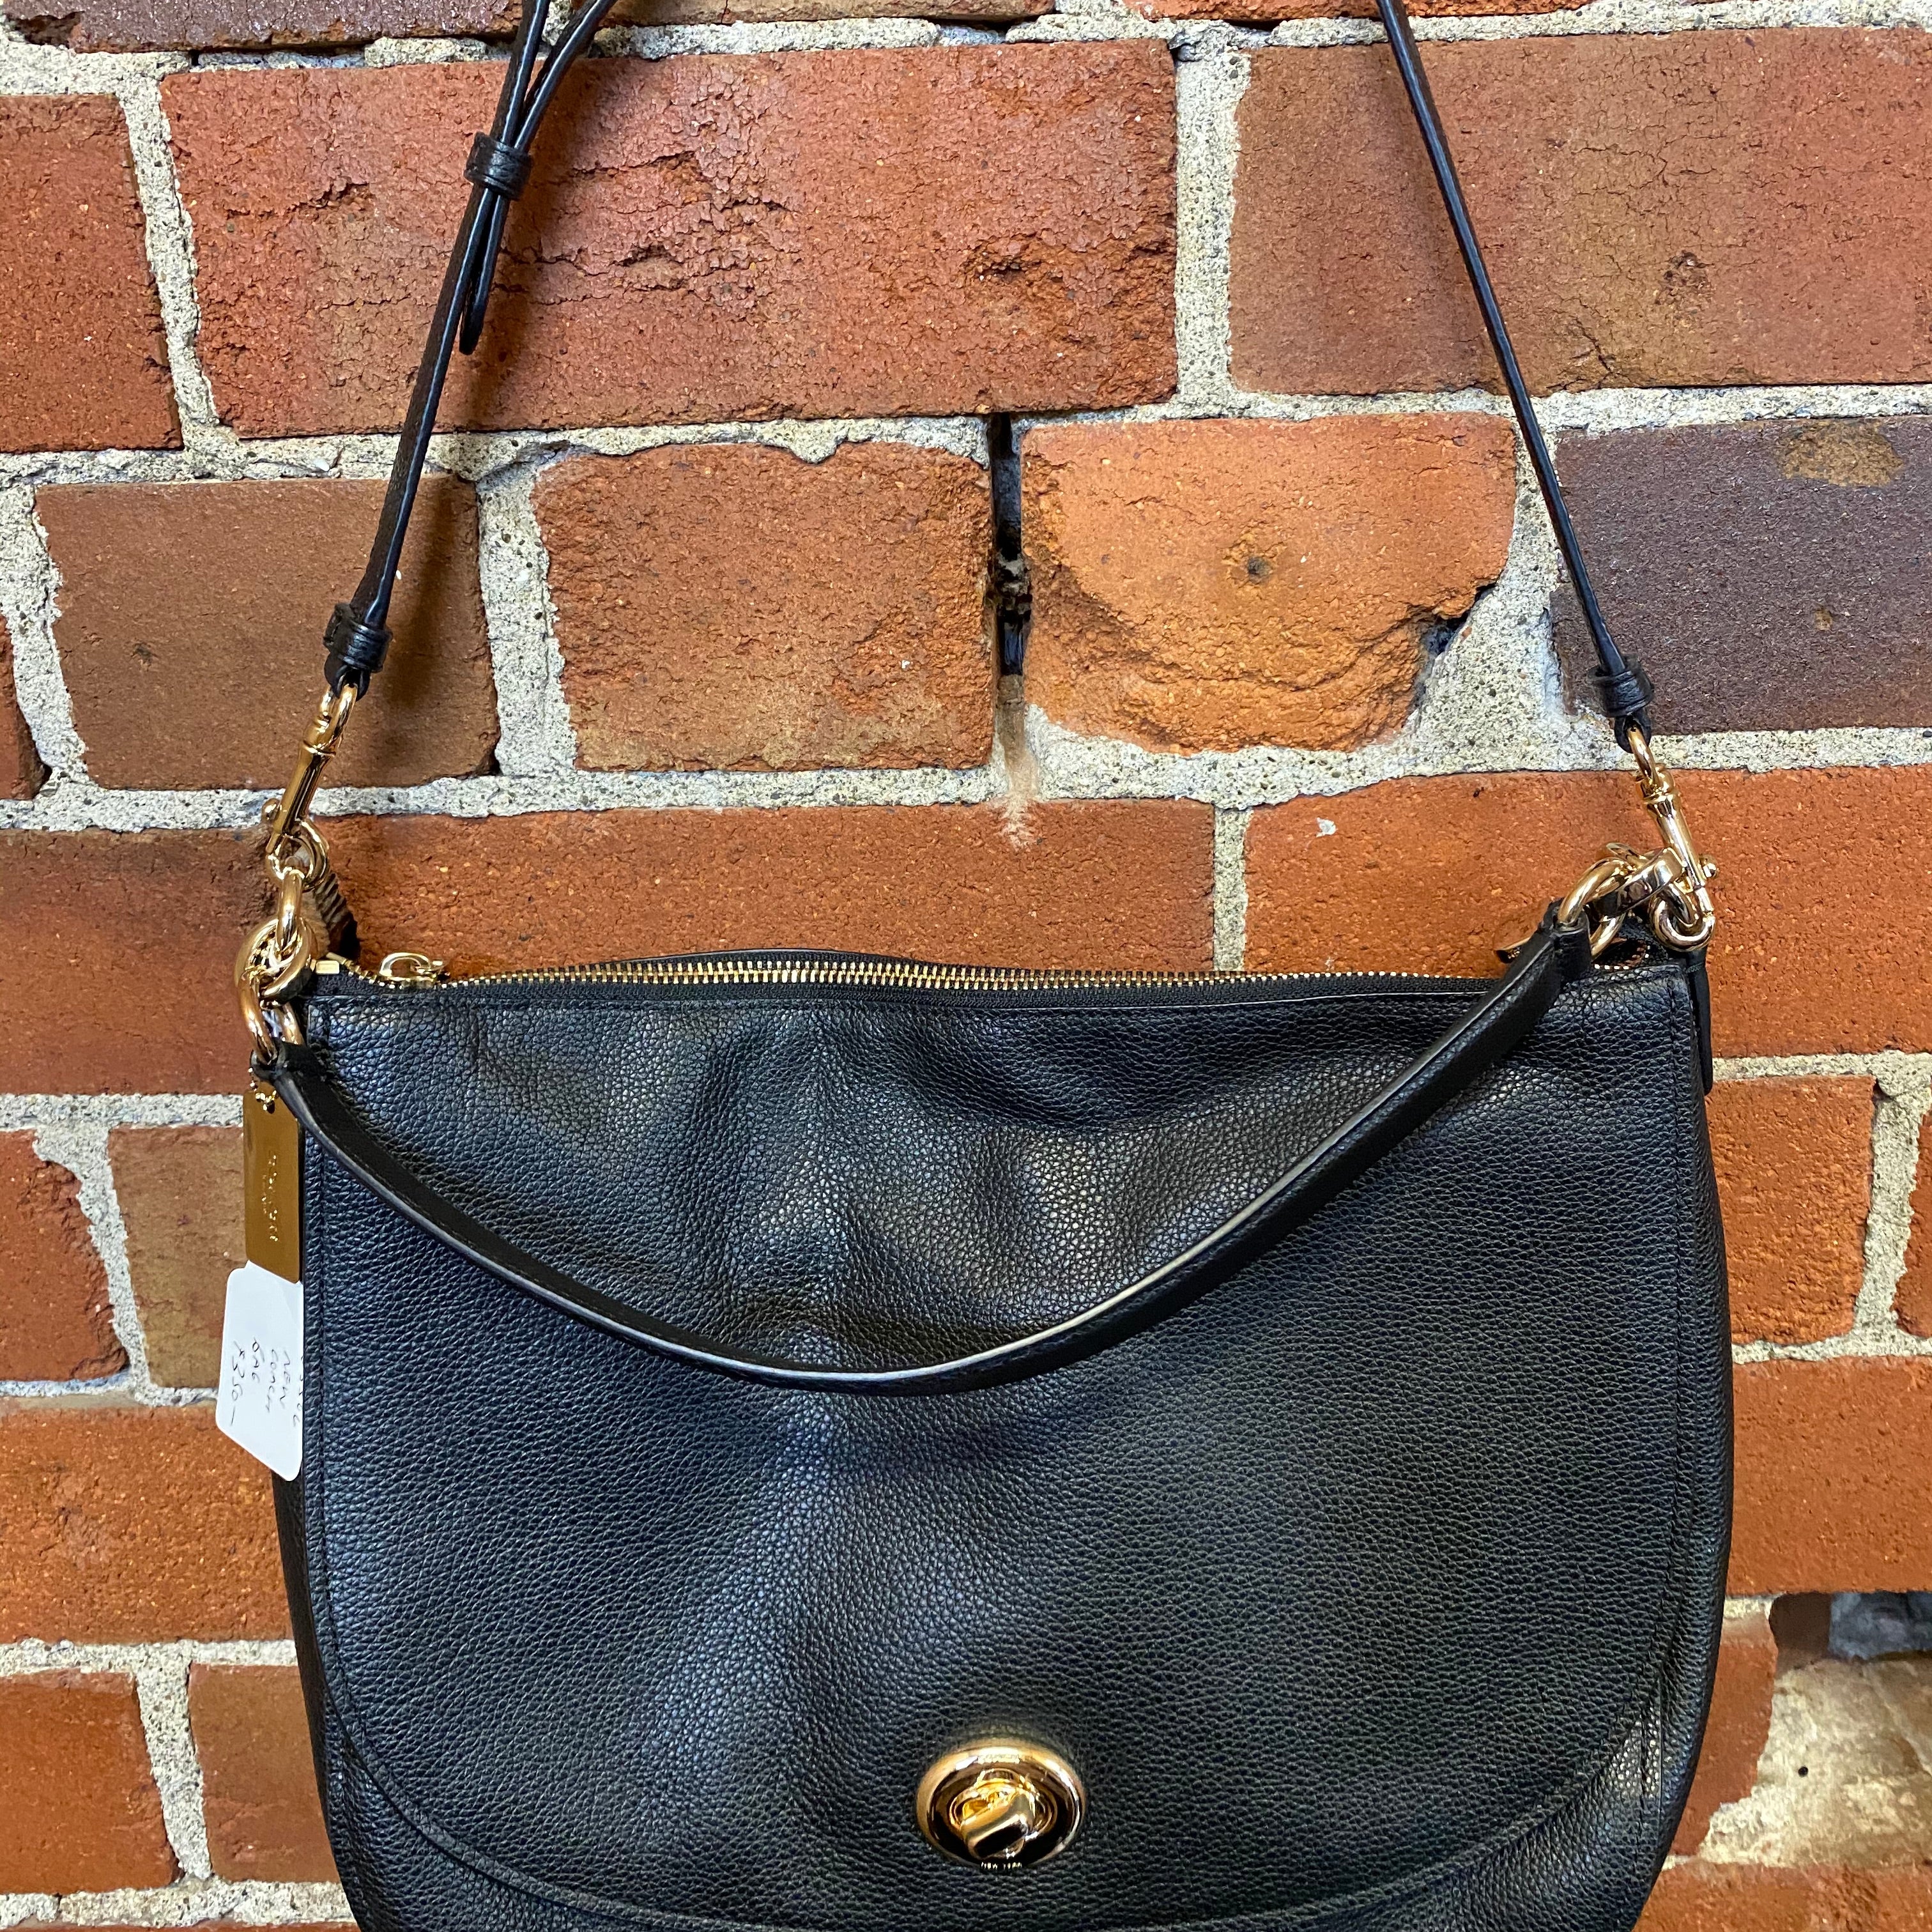 COACH Leather handbag